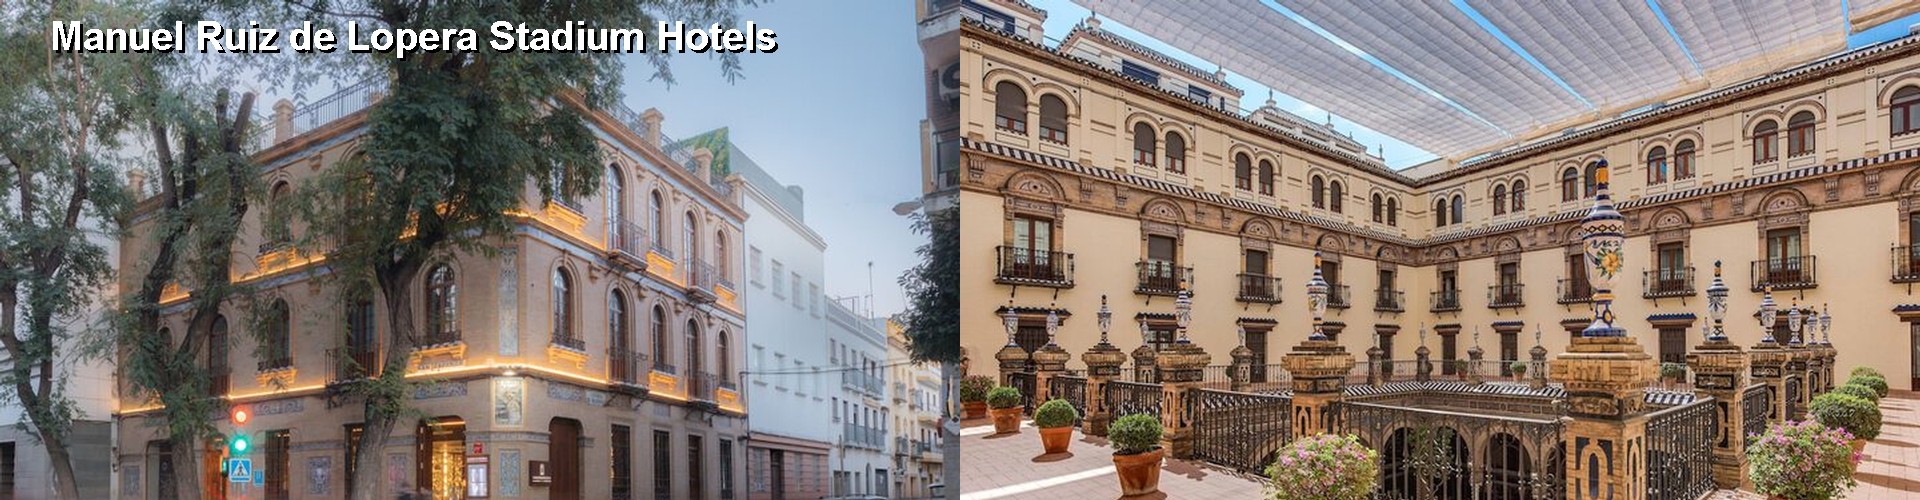 5 Best Hotels near Manuel Ruiz de Lopera Stadium